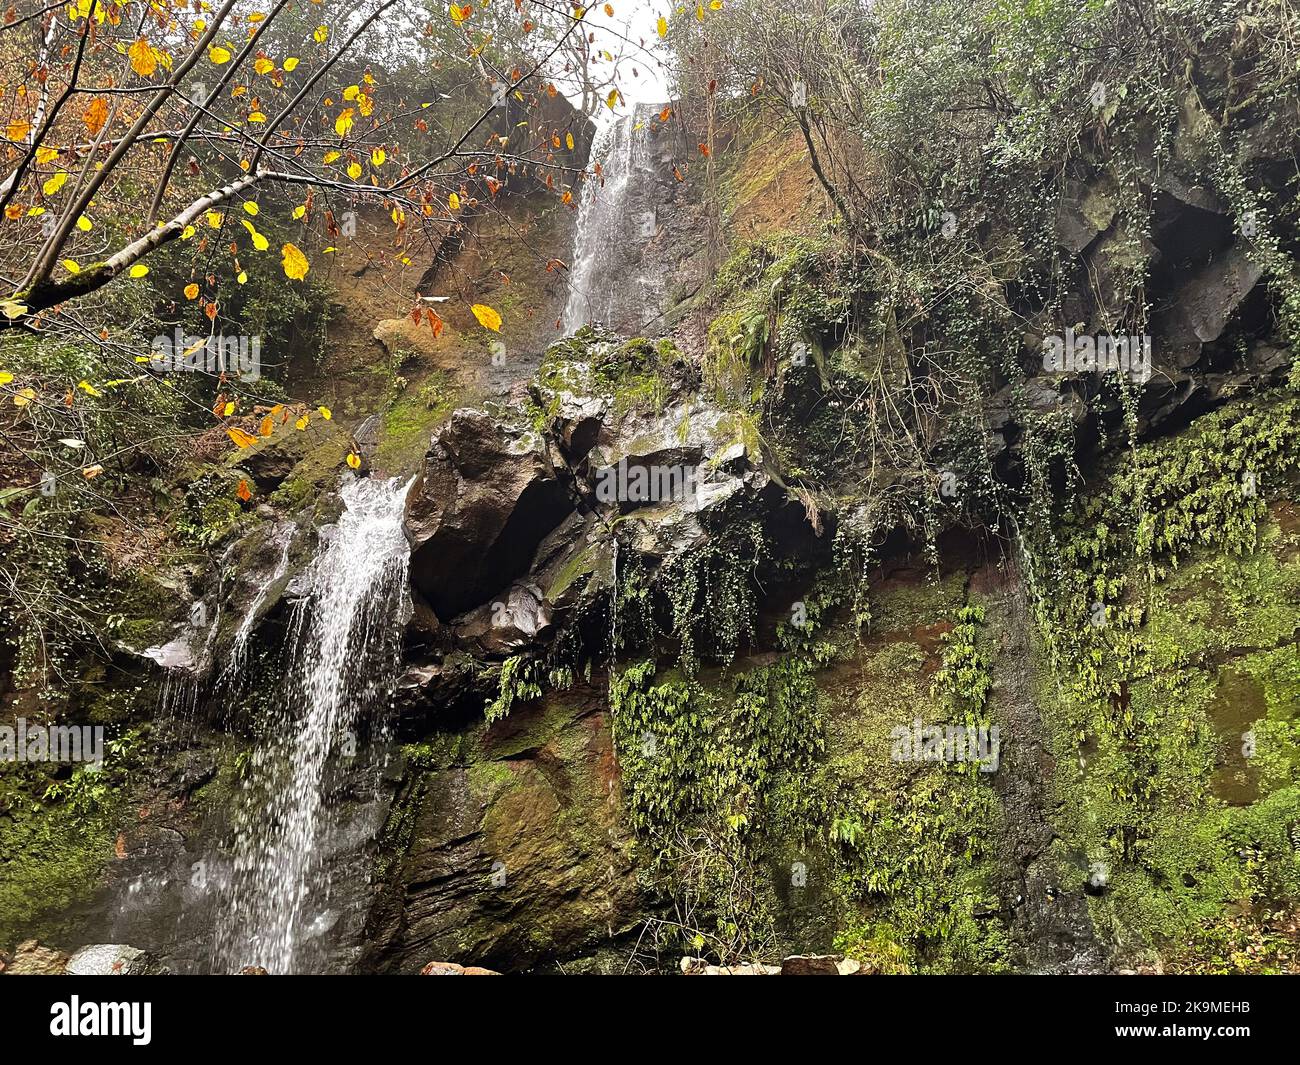 The waterfall of Conca della Campania, Italy. Stock Photo